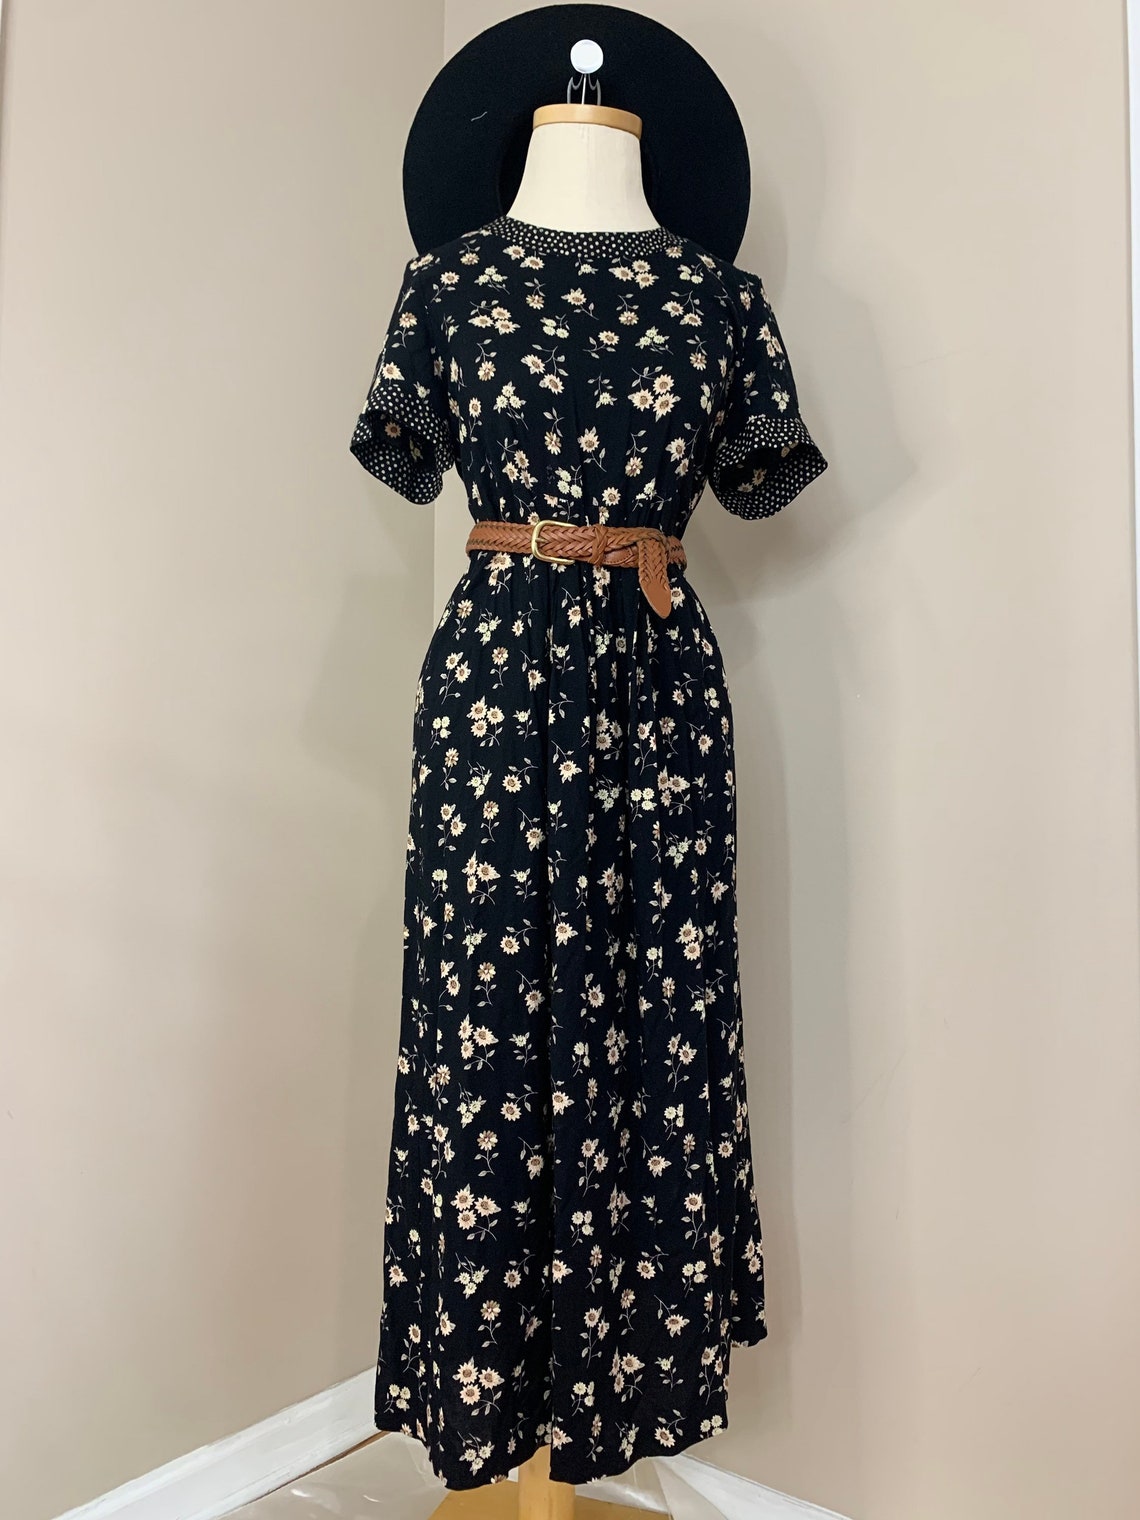 Vintage Long Black Sunflower Dress | Etsy